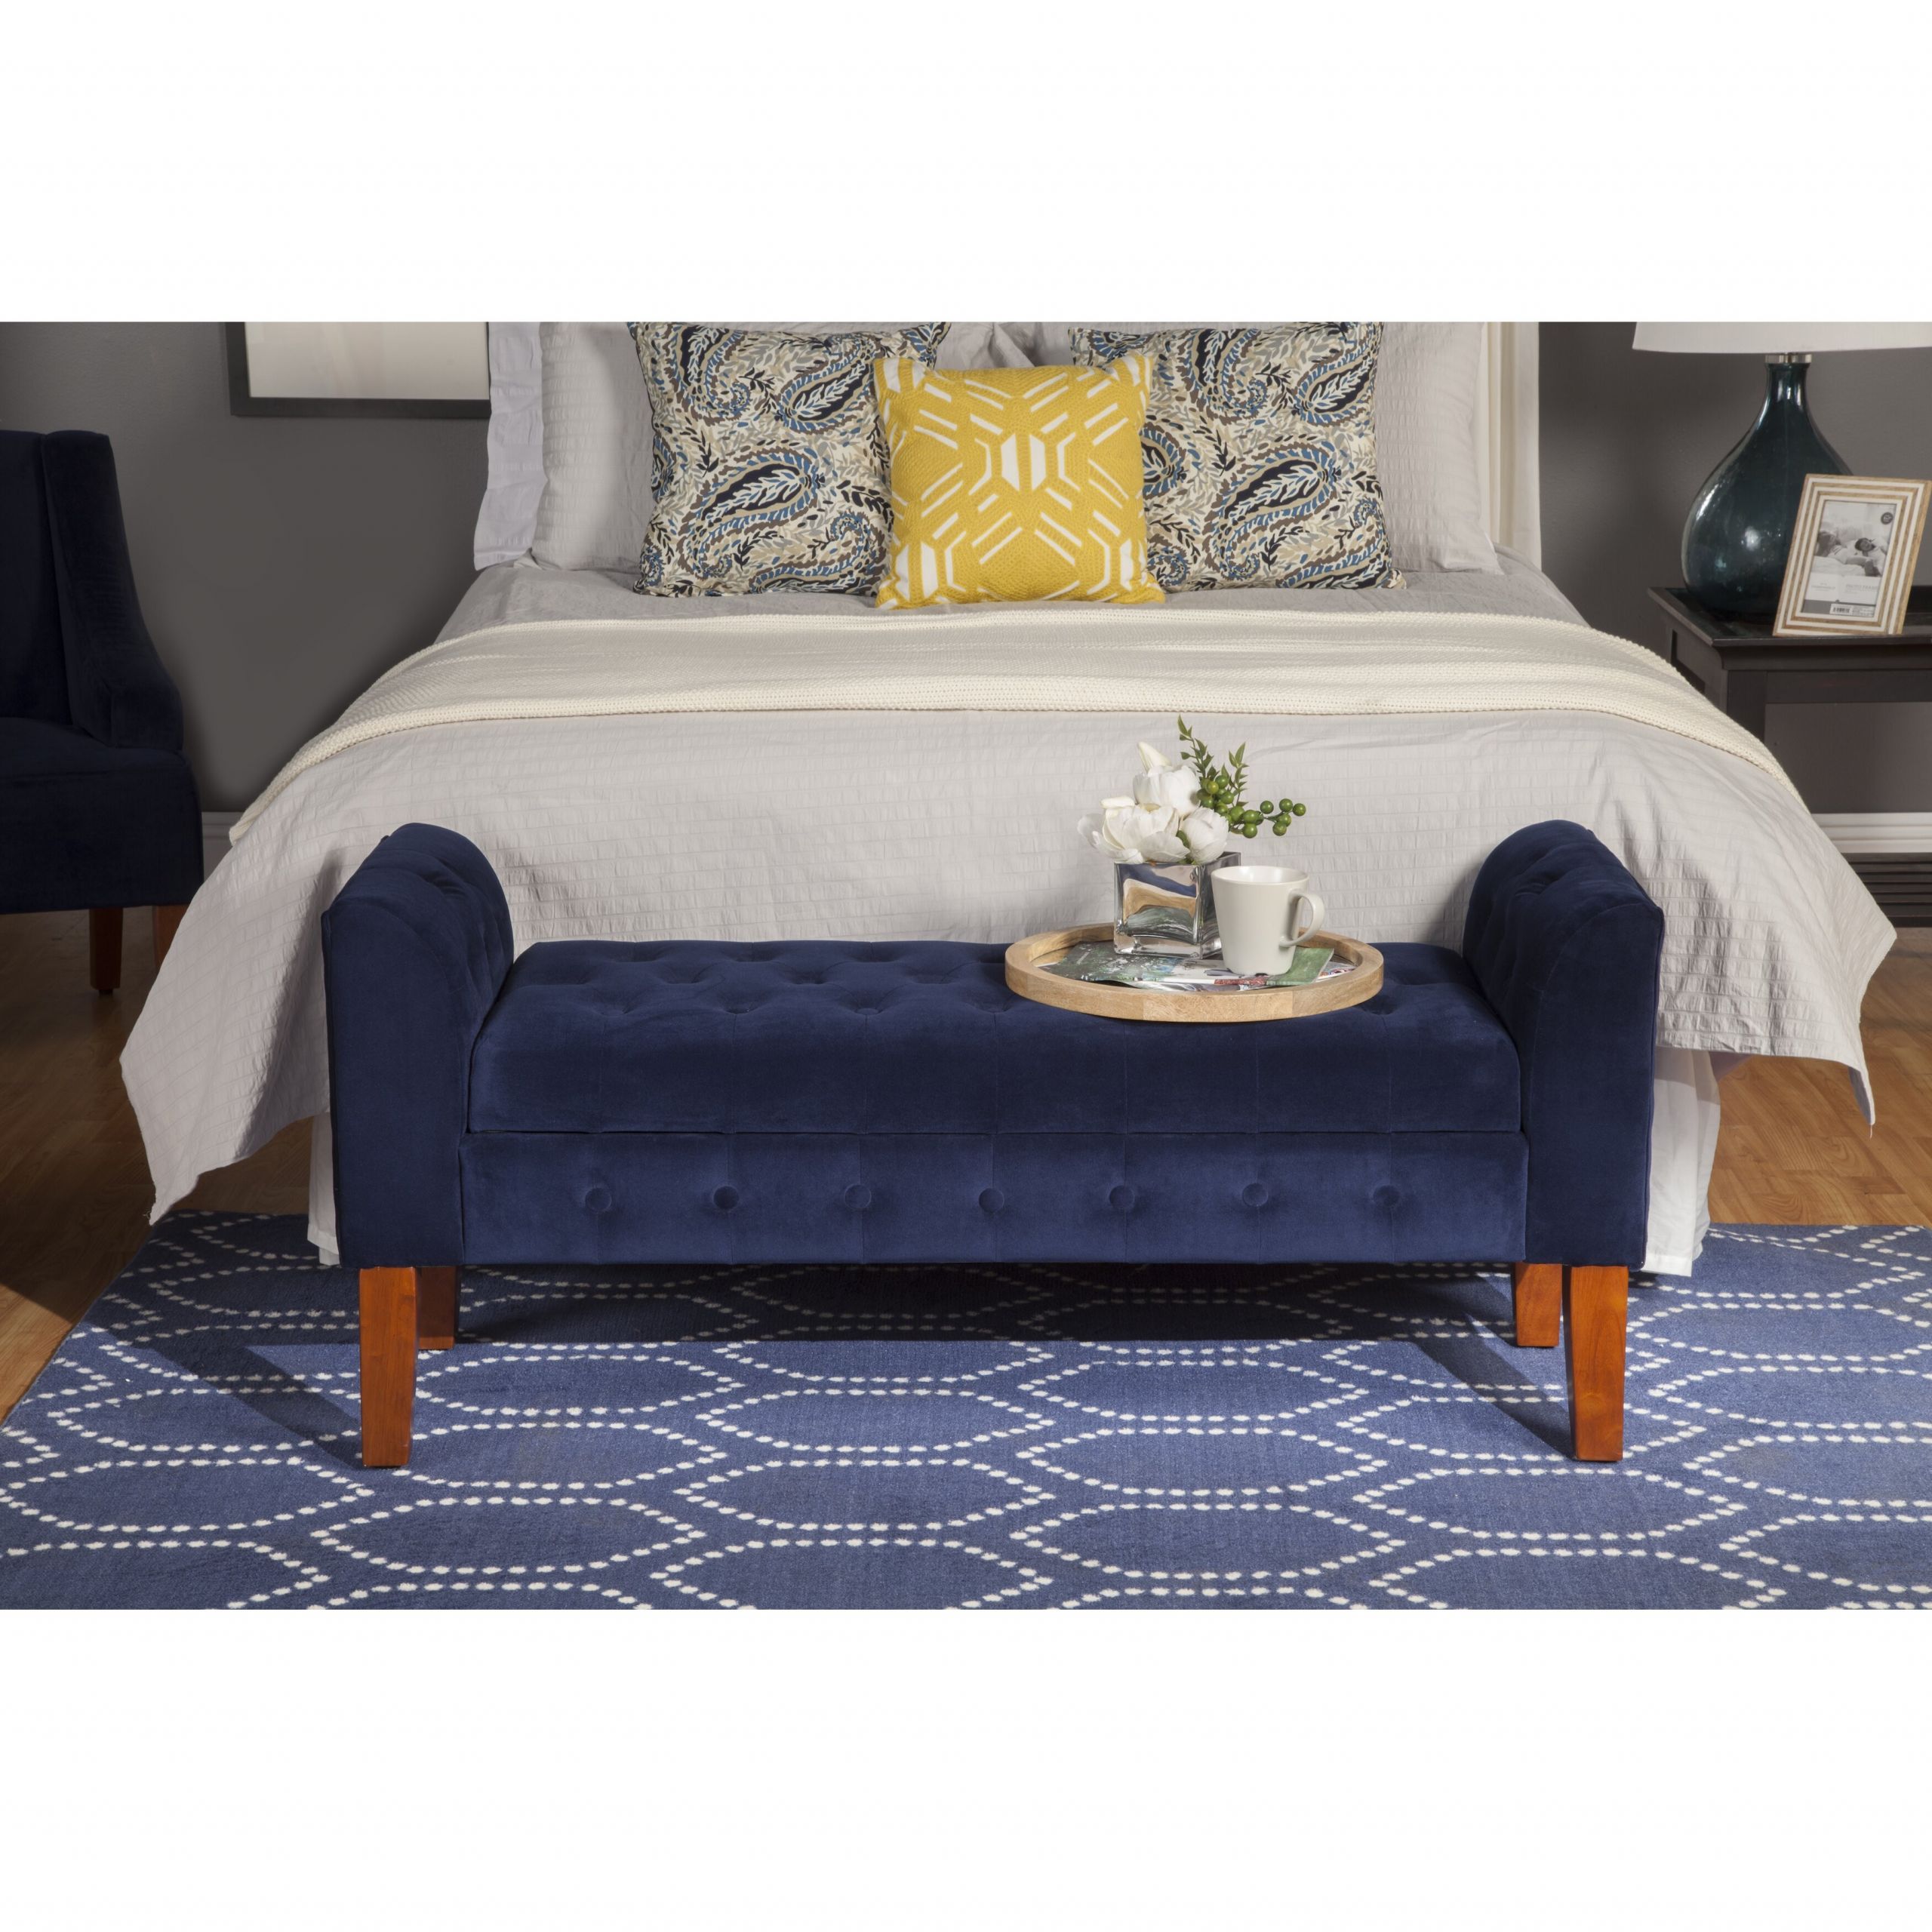 Bedroom Bench With Storage
 HomePop Storage Bench & Reviews